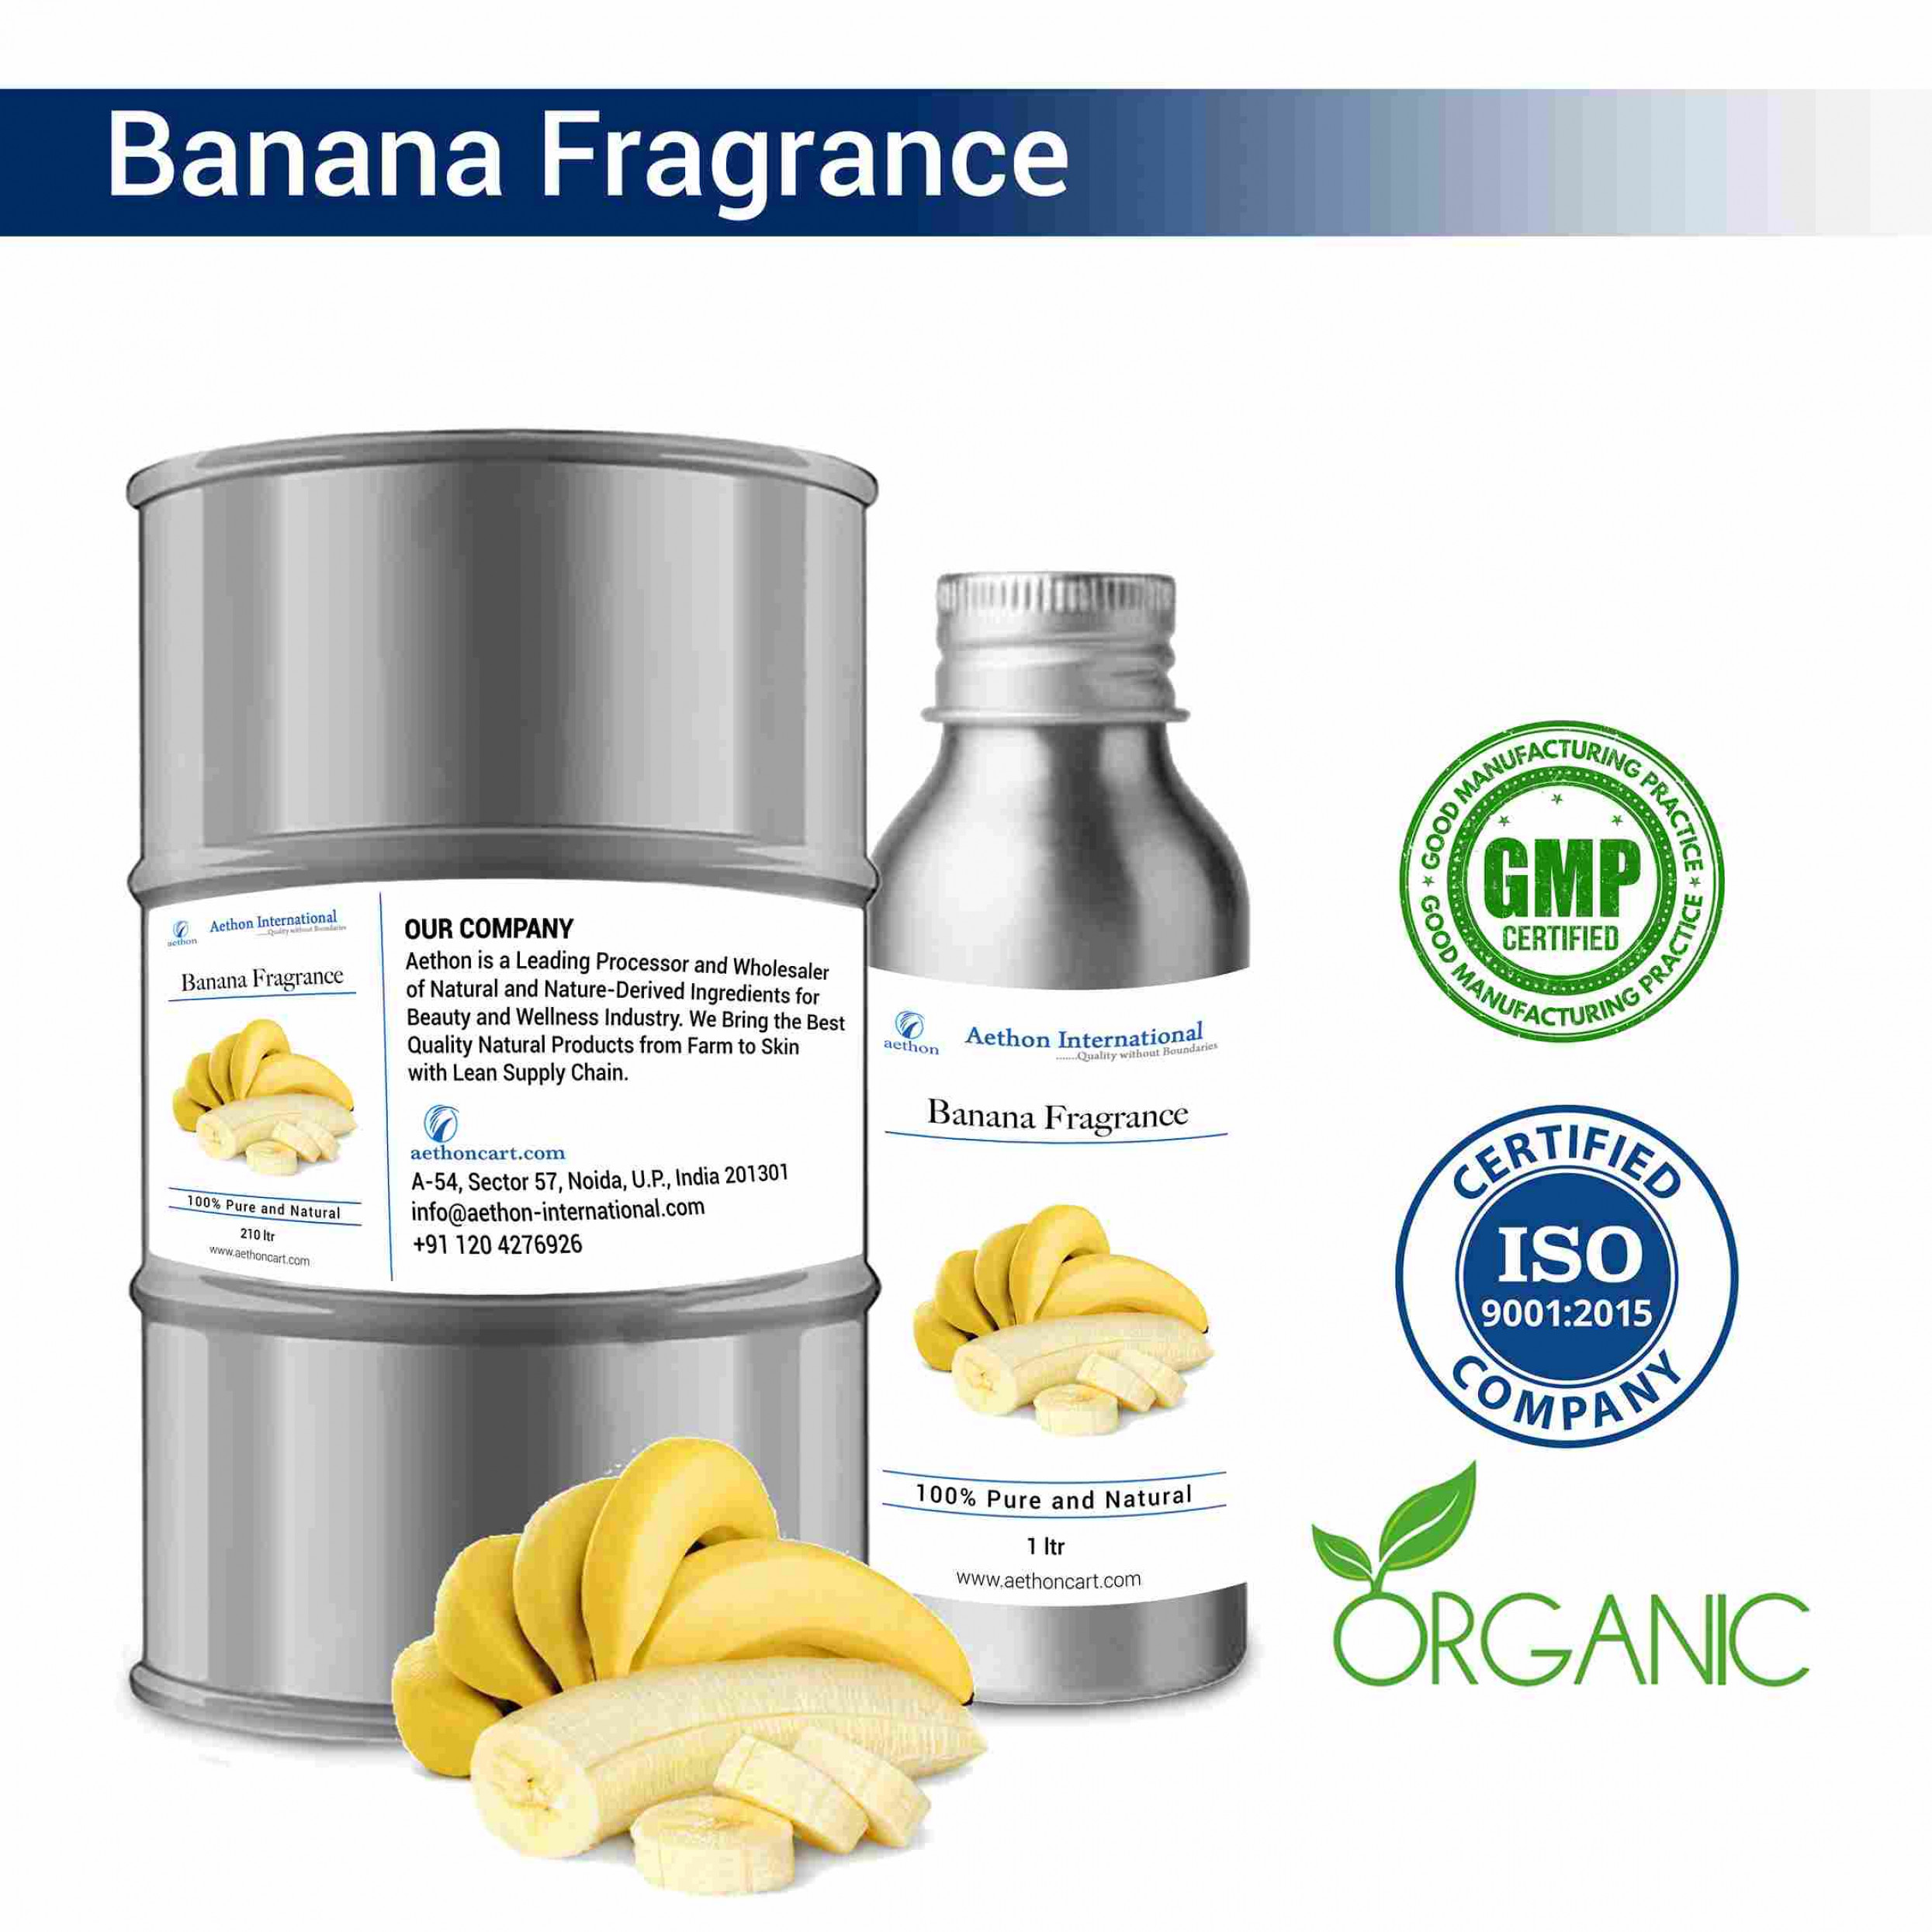 Banana Fragrance